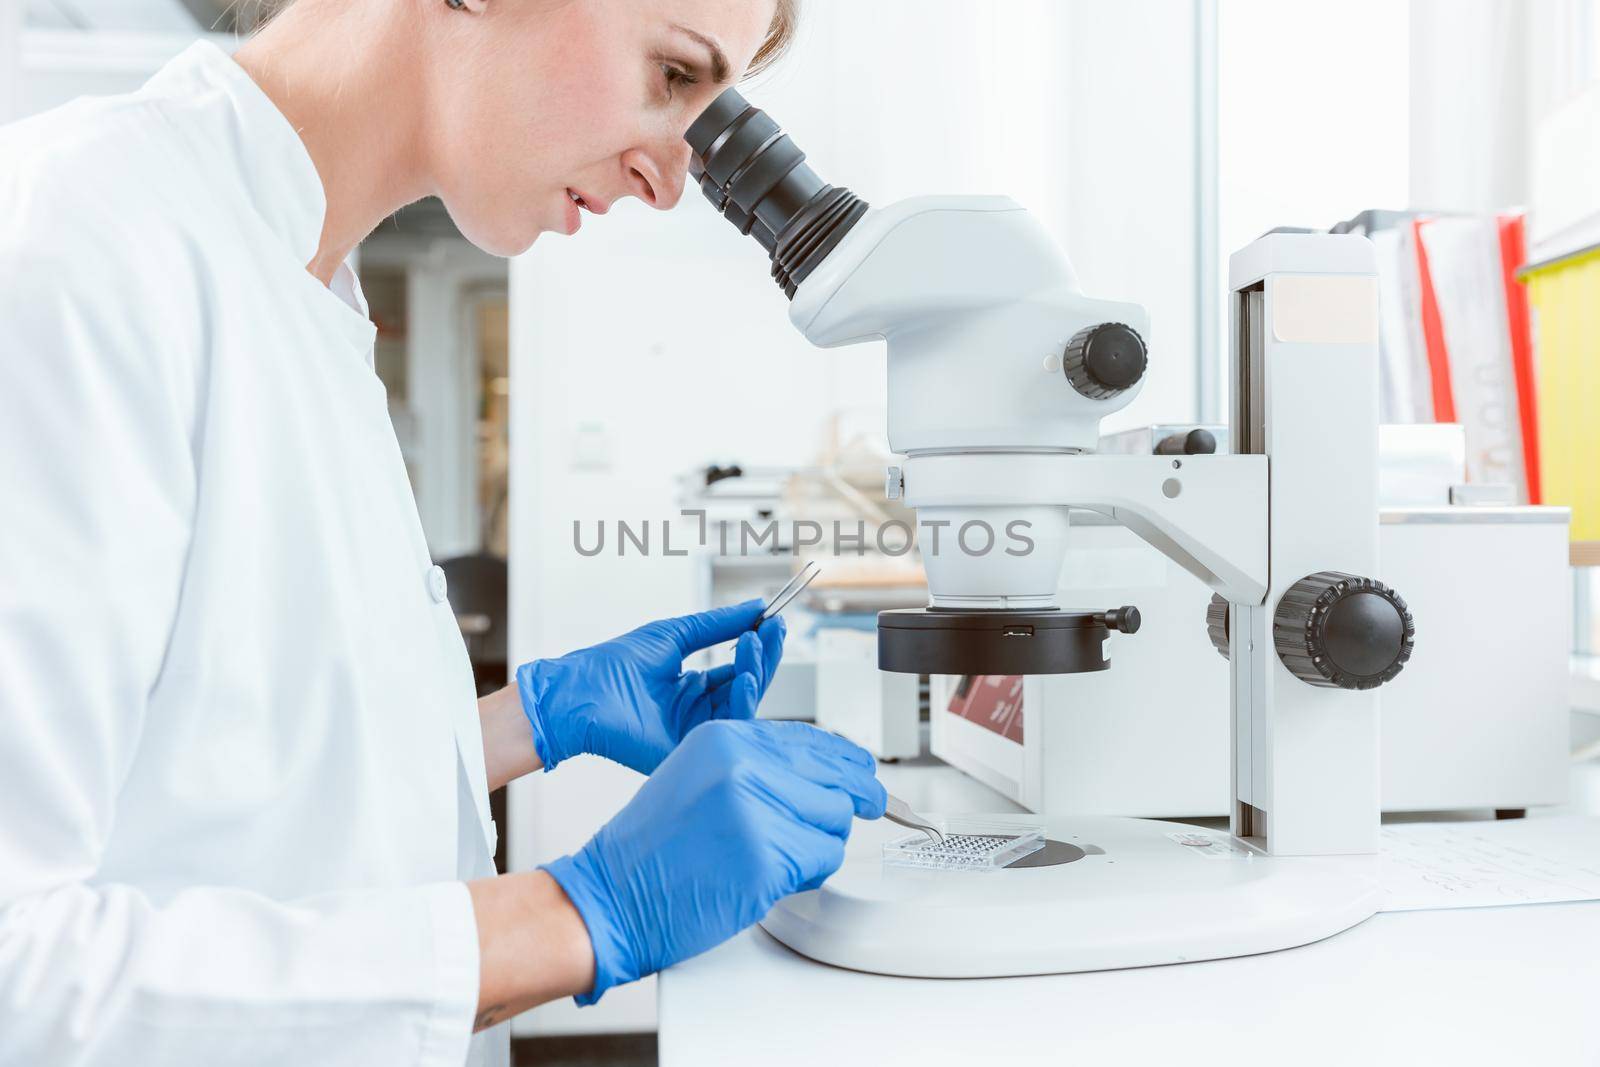 Female caucasian researcher looking through microscope in laboratory